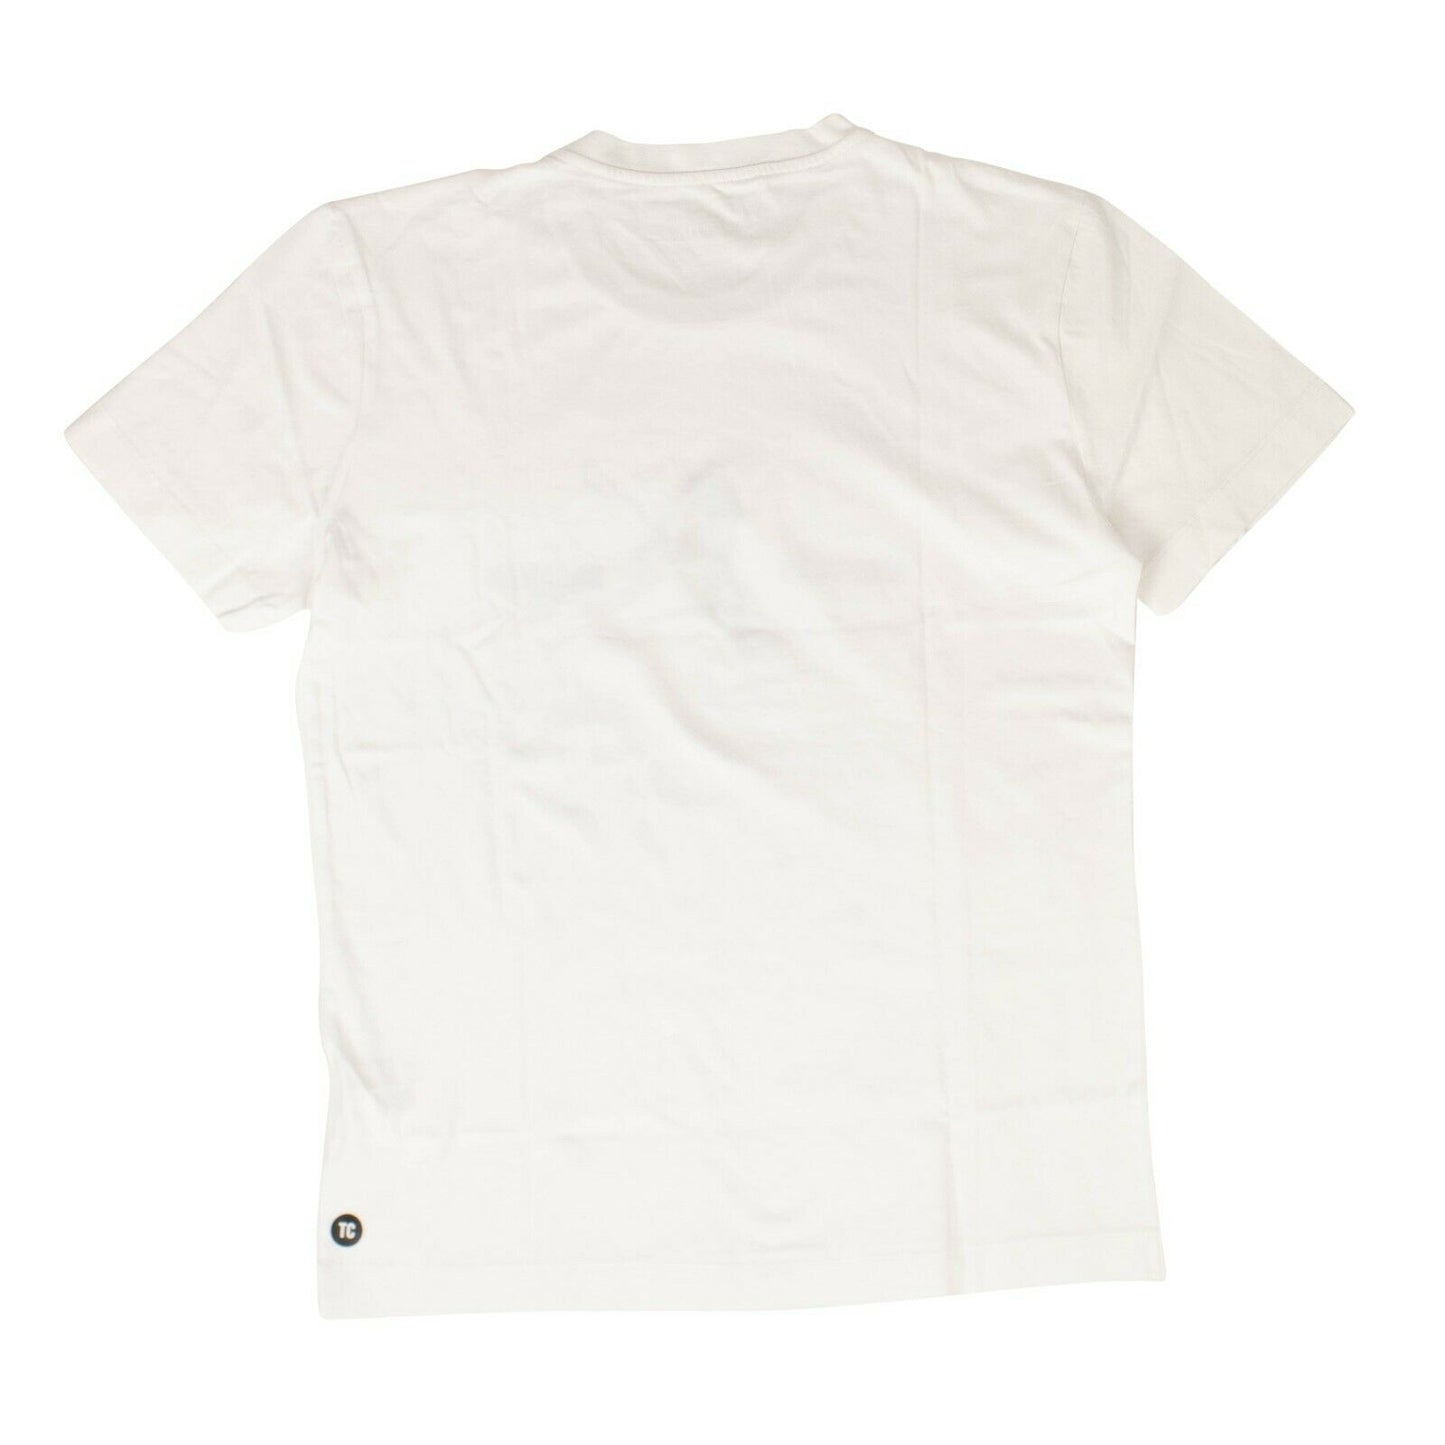 Tim Coppens Cotton American Dreamer T-Shirt